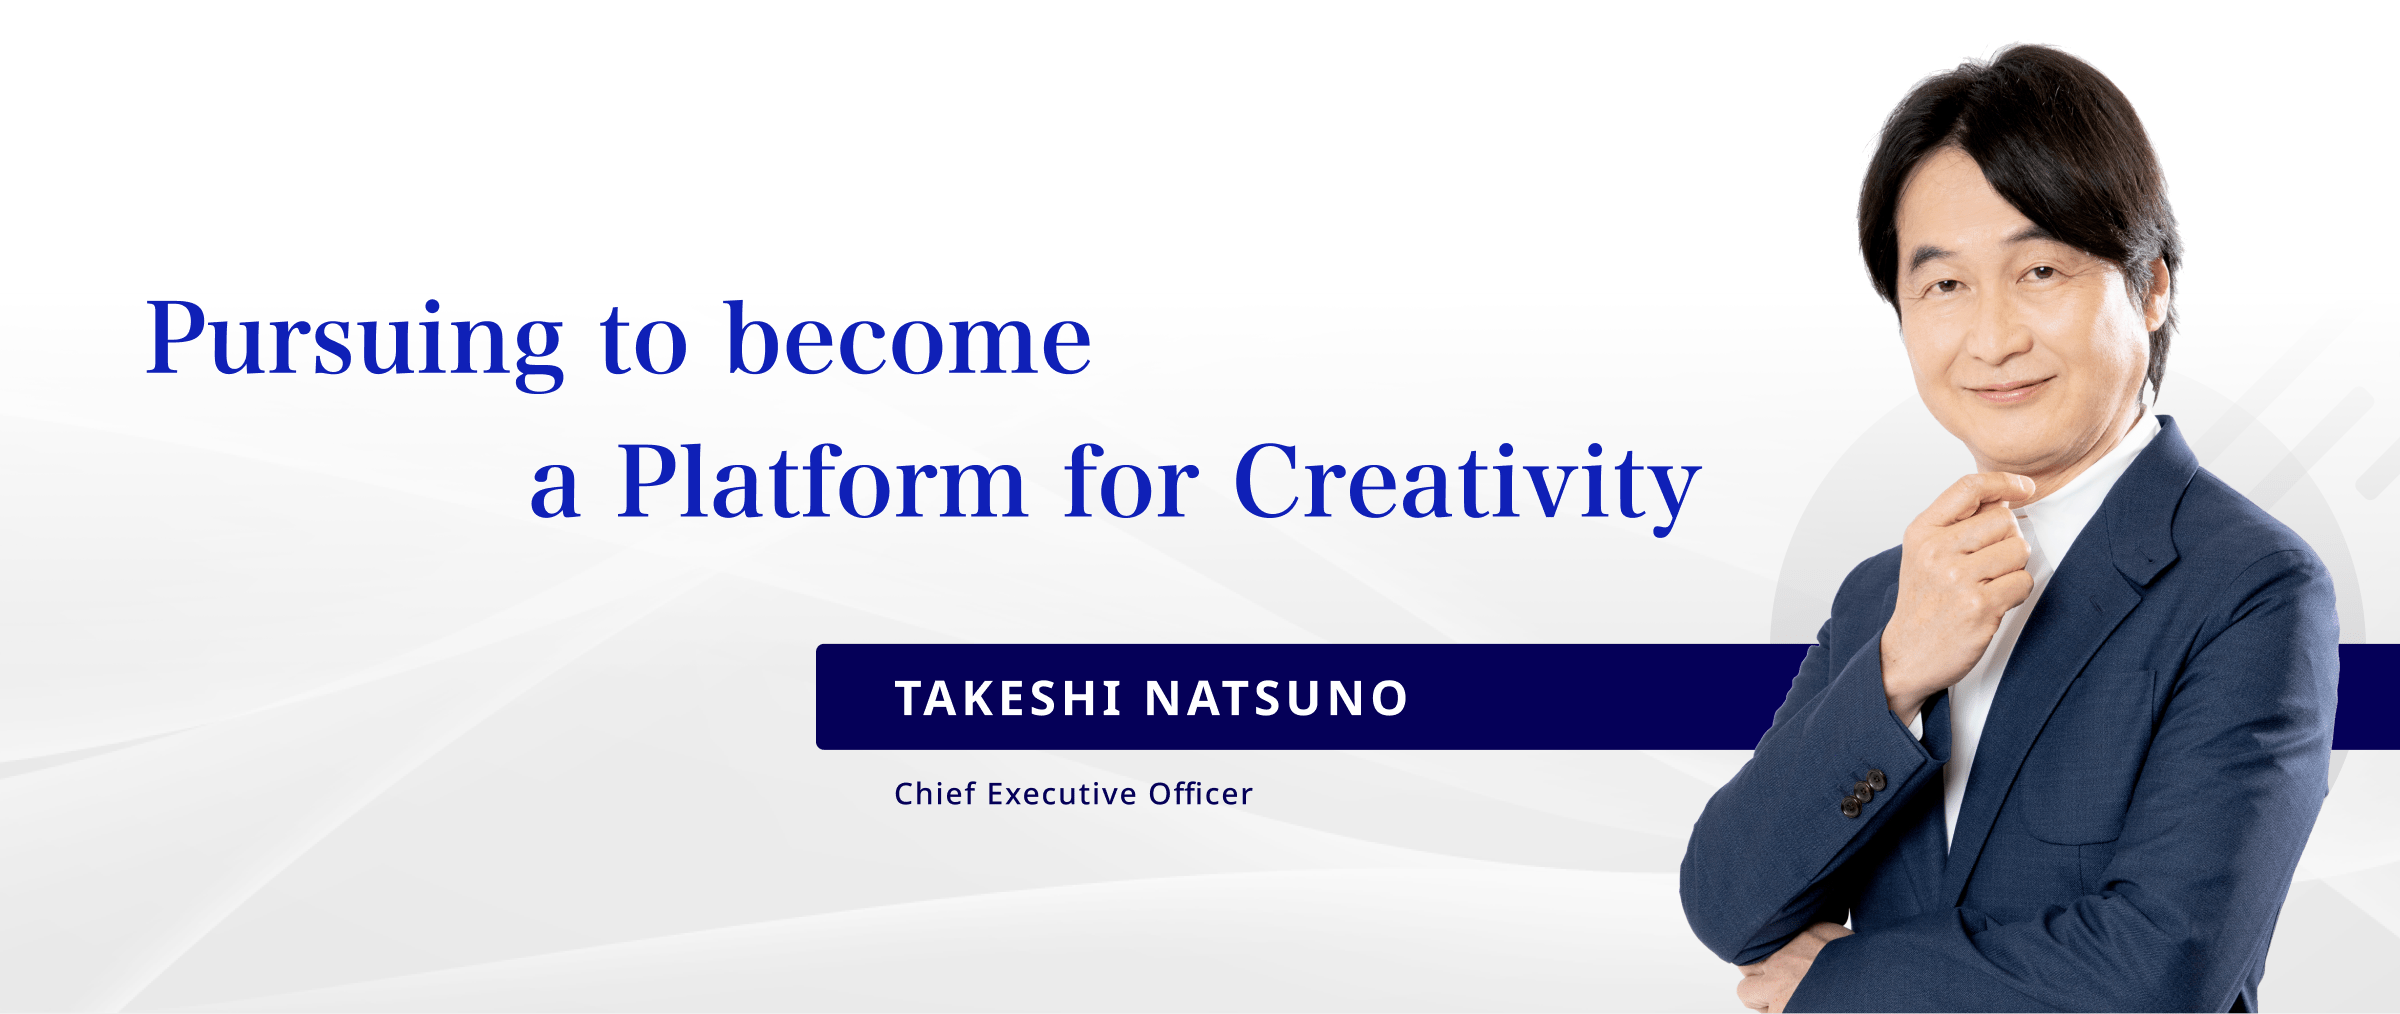 Chief Executive Officer/Takeshi Natsuno